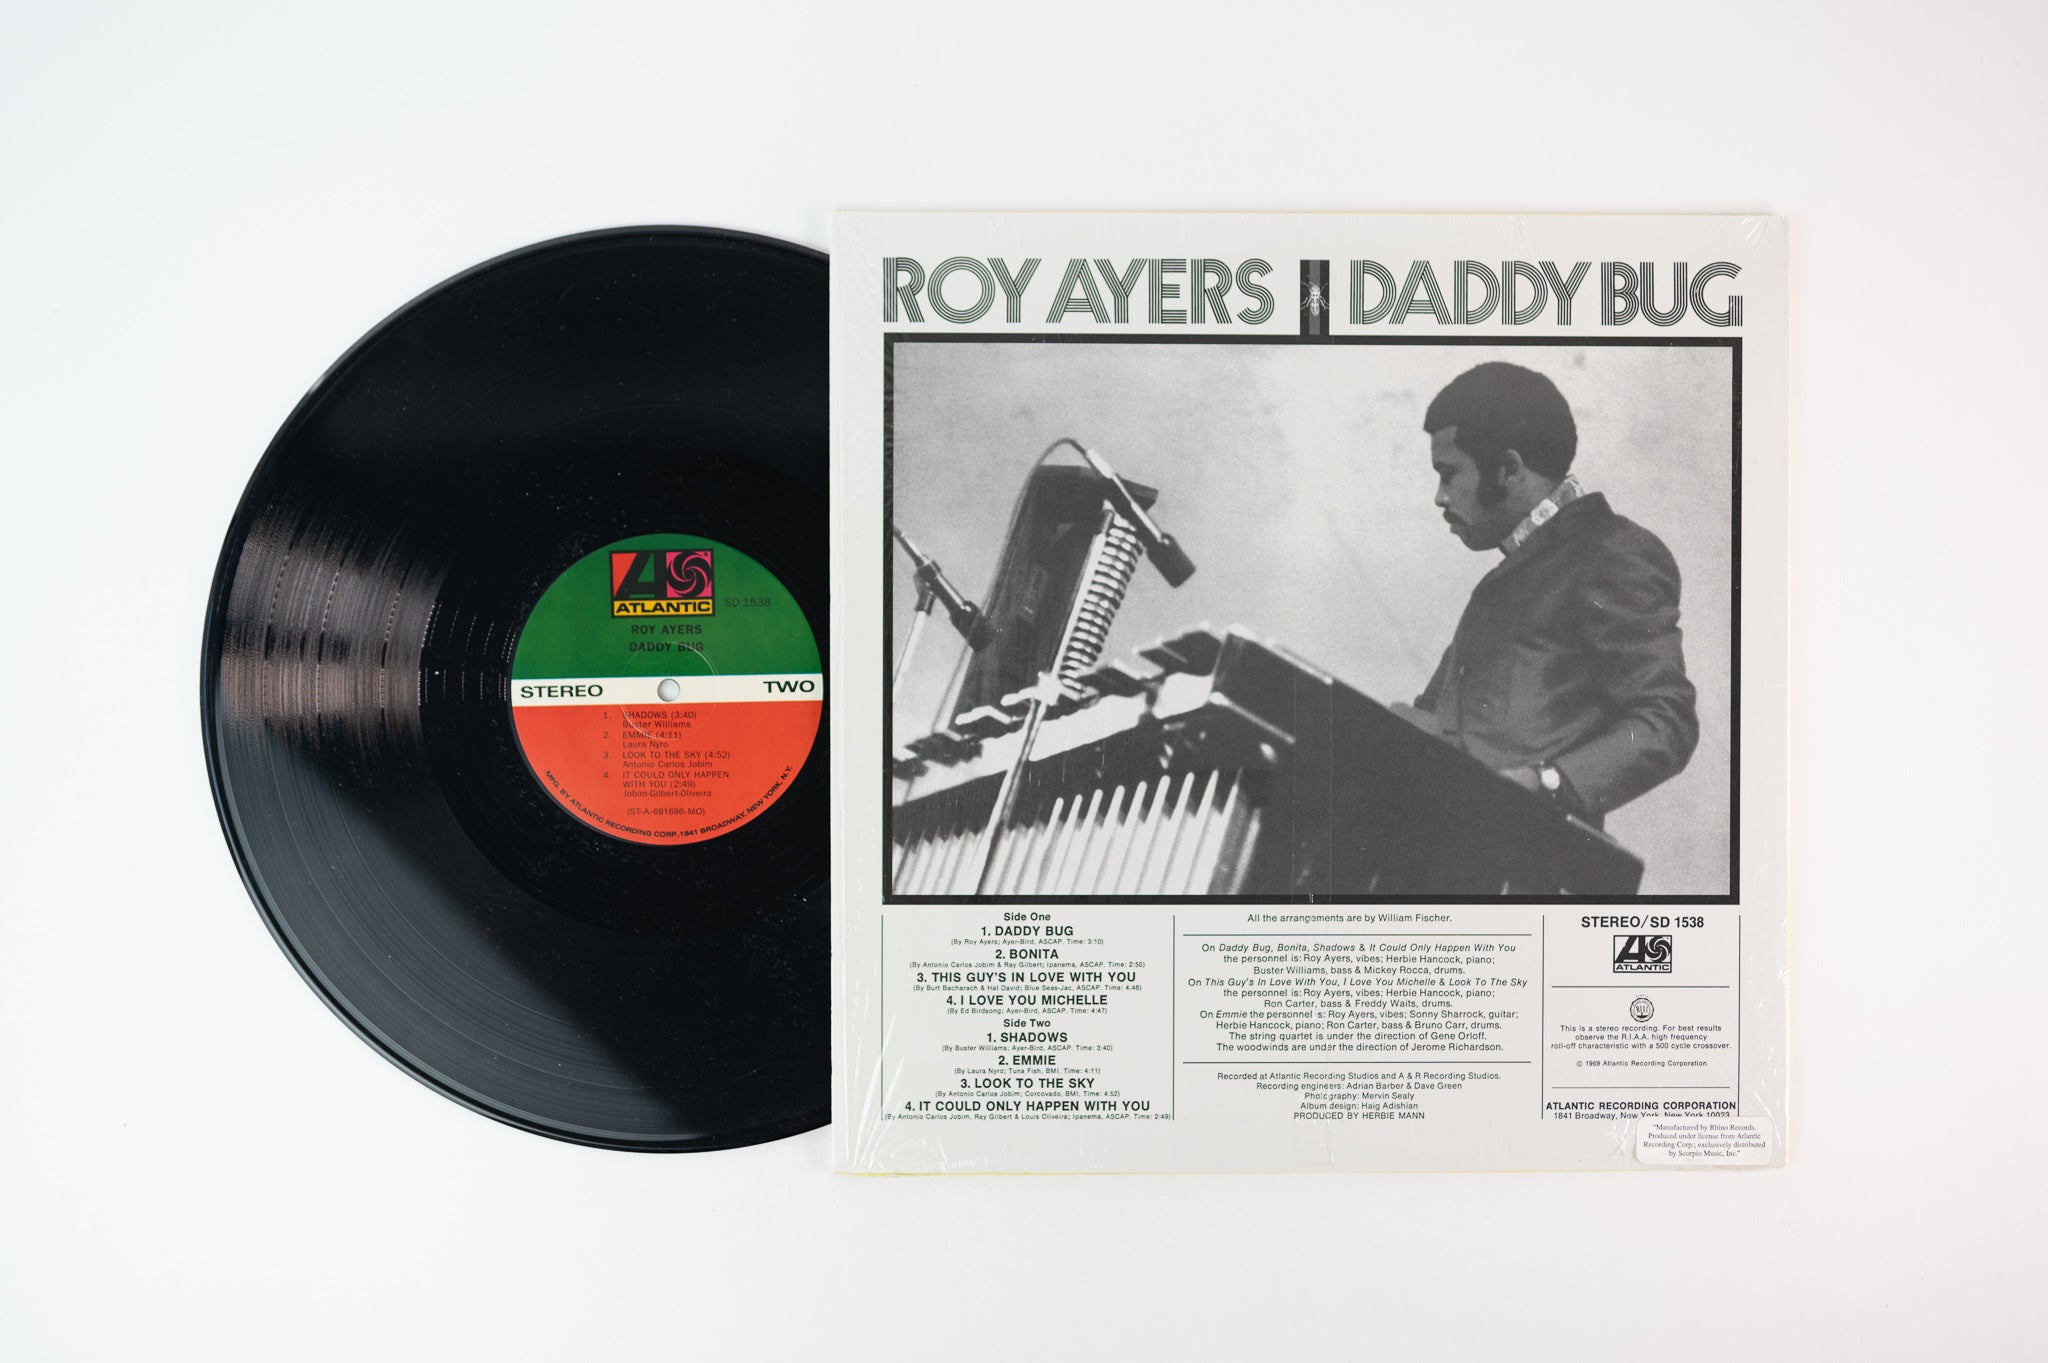 Roy Ayers - Daddy Bug on Atlantic Reissue